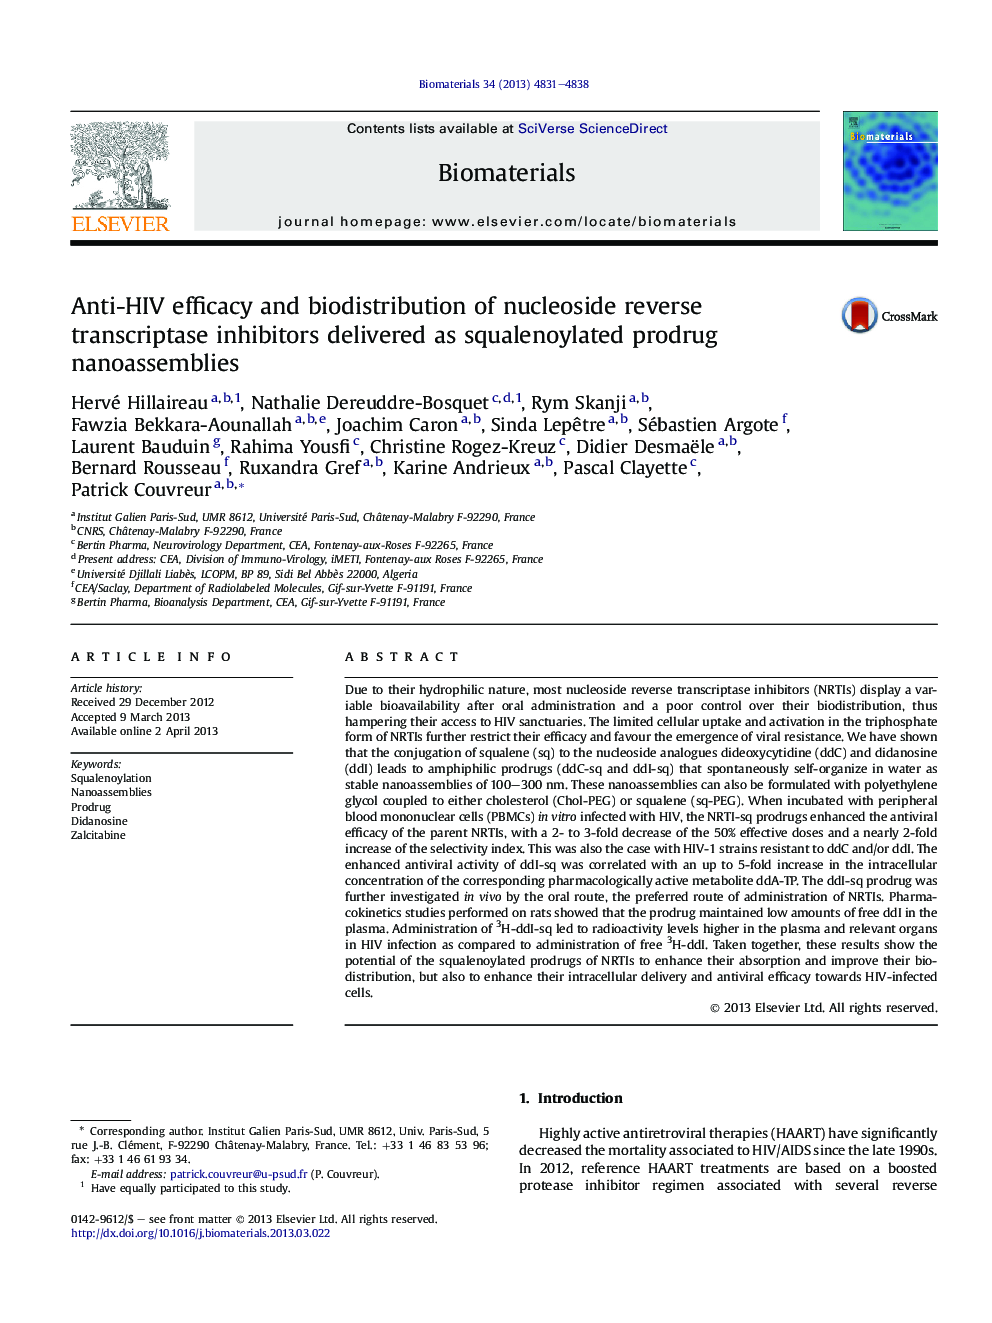 Anti-HIV efficacy and biodistribution of nucleoside reverse transcriptase inhibitors delivered as squalenoylated prodrug nanoassemblies